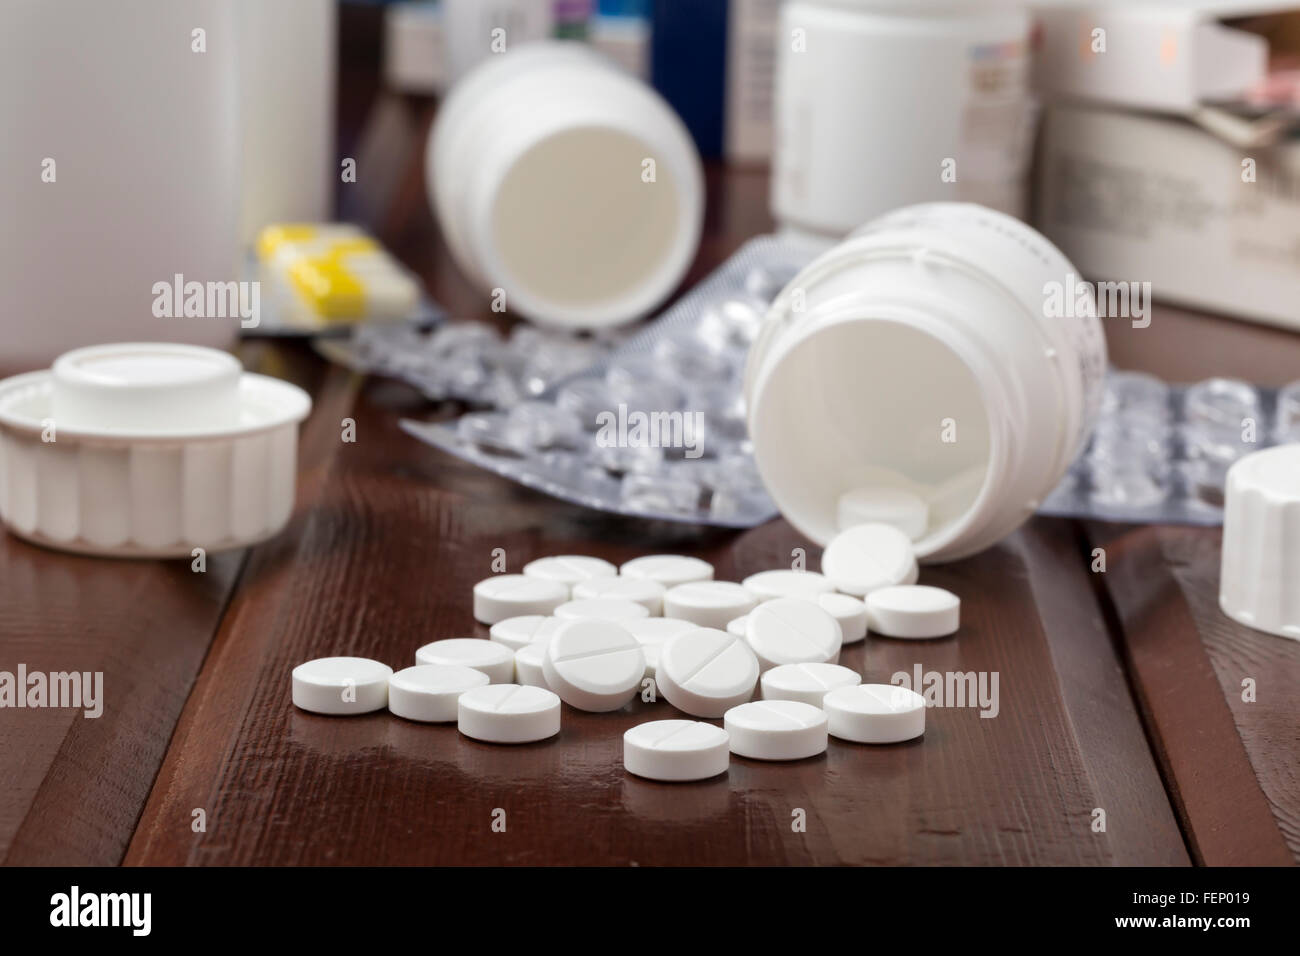 White round pills,empty blister pack and pill bottles Stock Photo